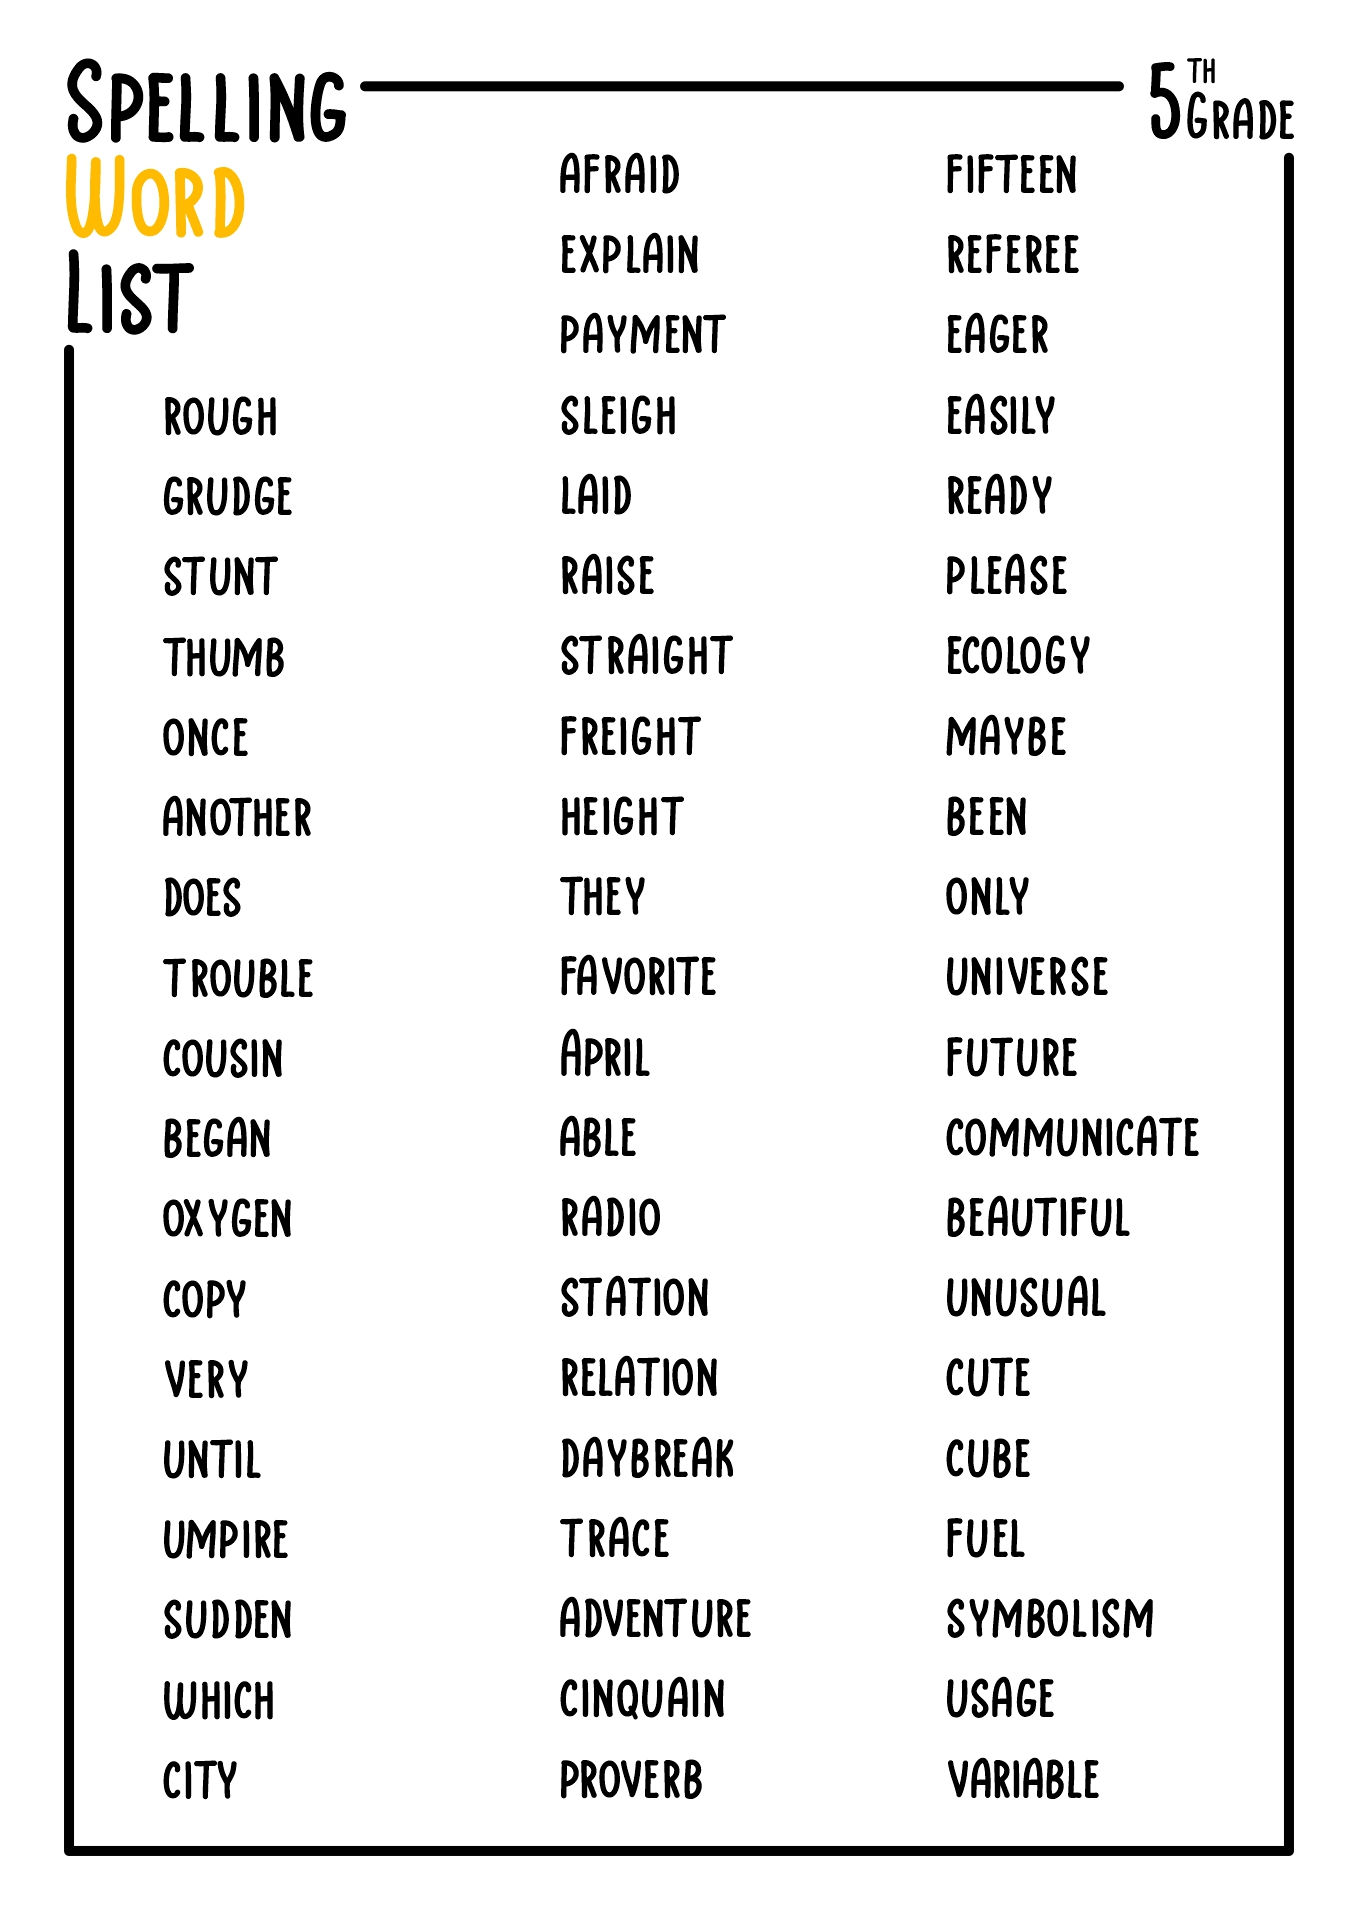 5th Grade Spelling Word List Image